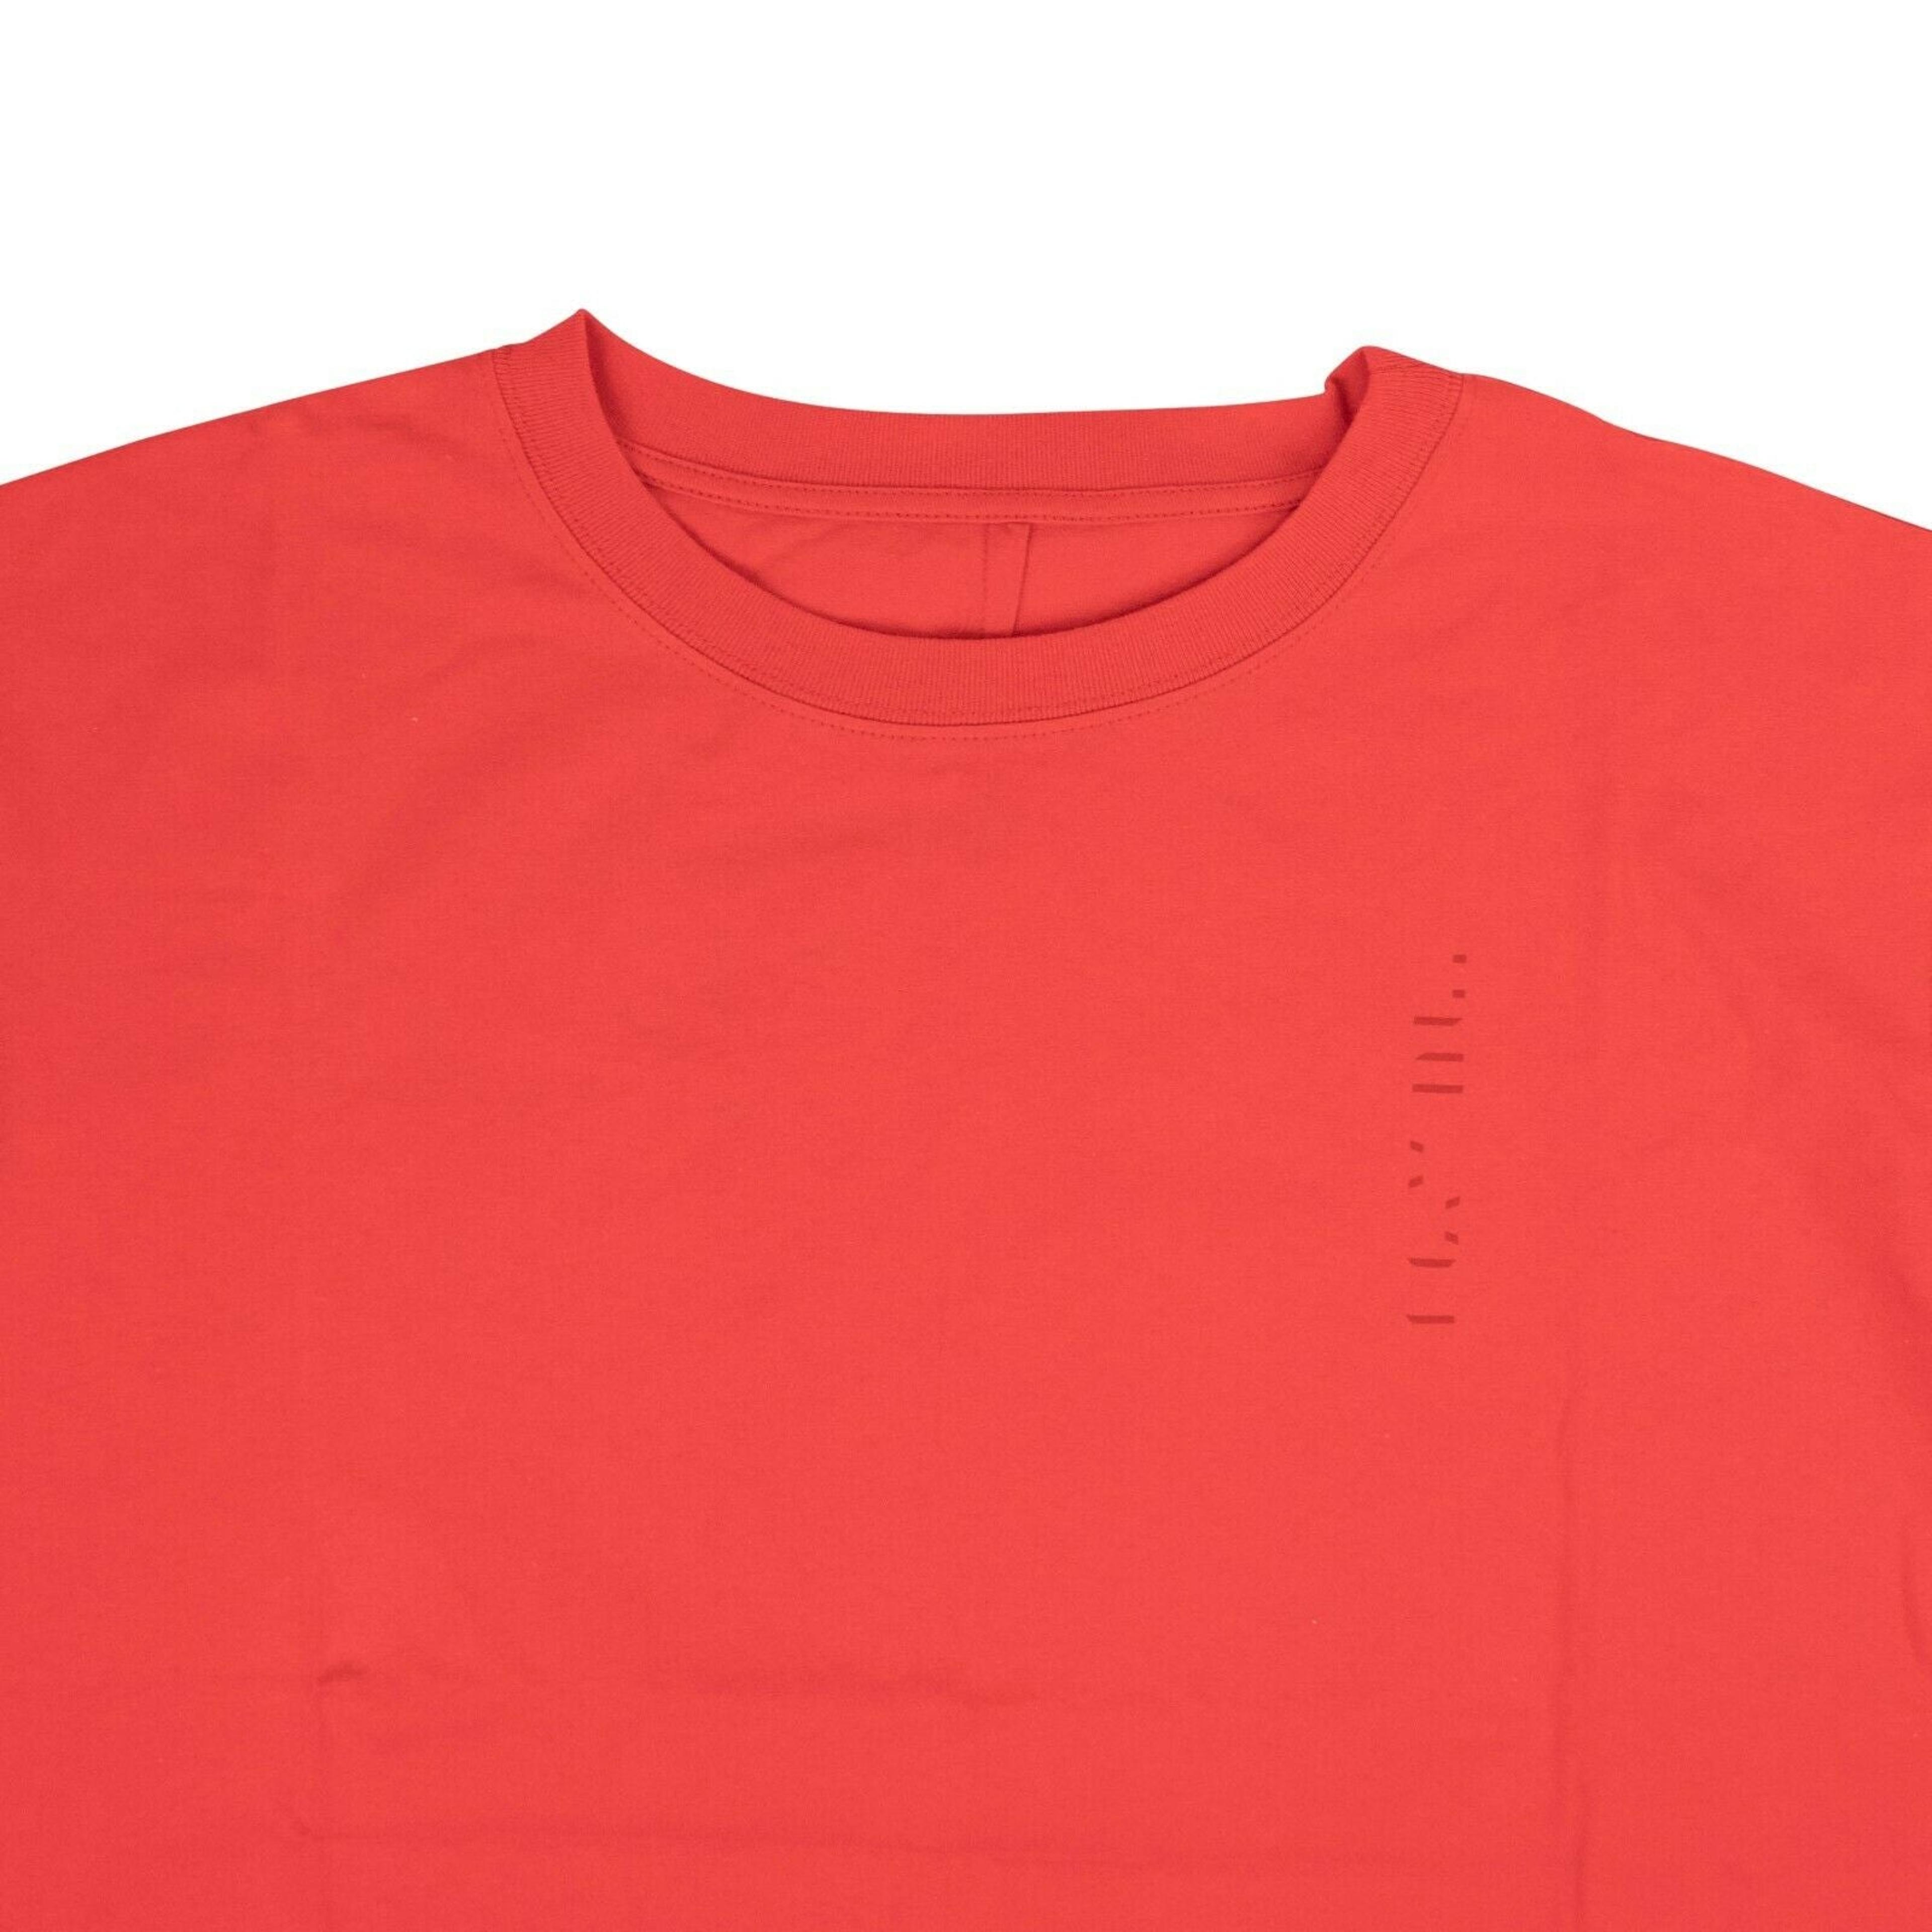 Alternate View 2 of Red Drawstring T-Shirt